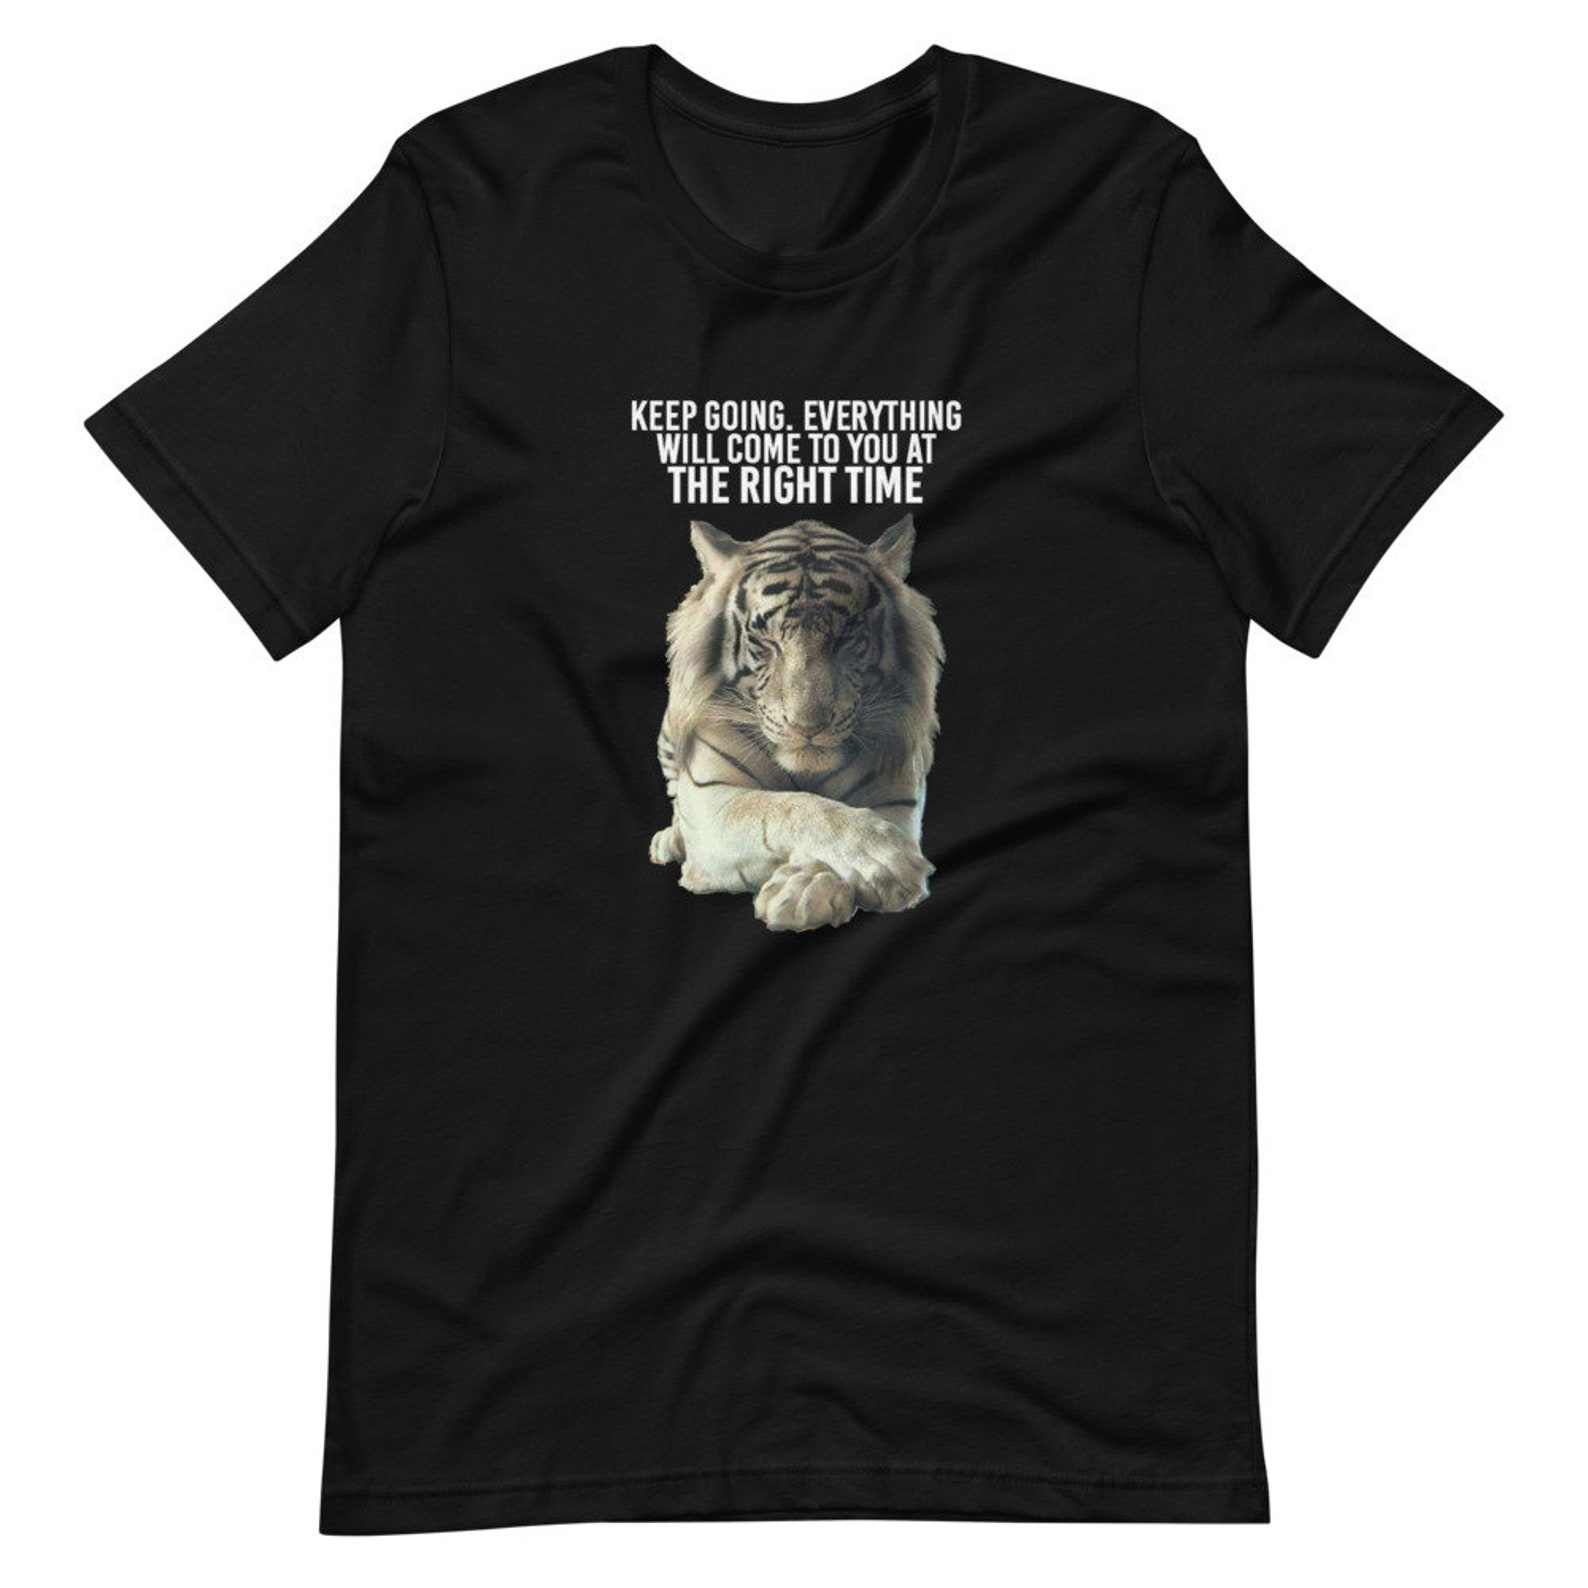 Tiger t-shirt Motivational tee Unisex T-Shirt | Etsy